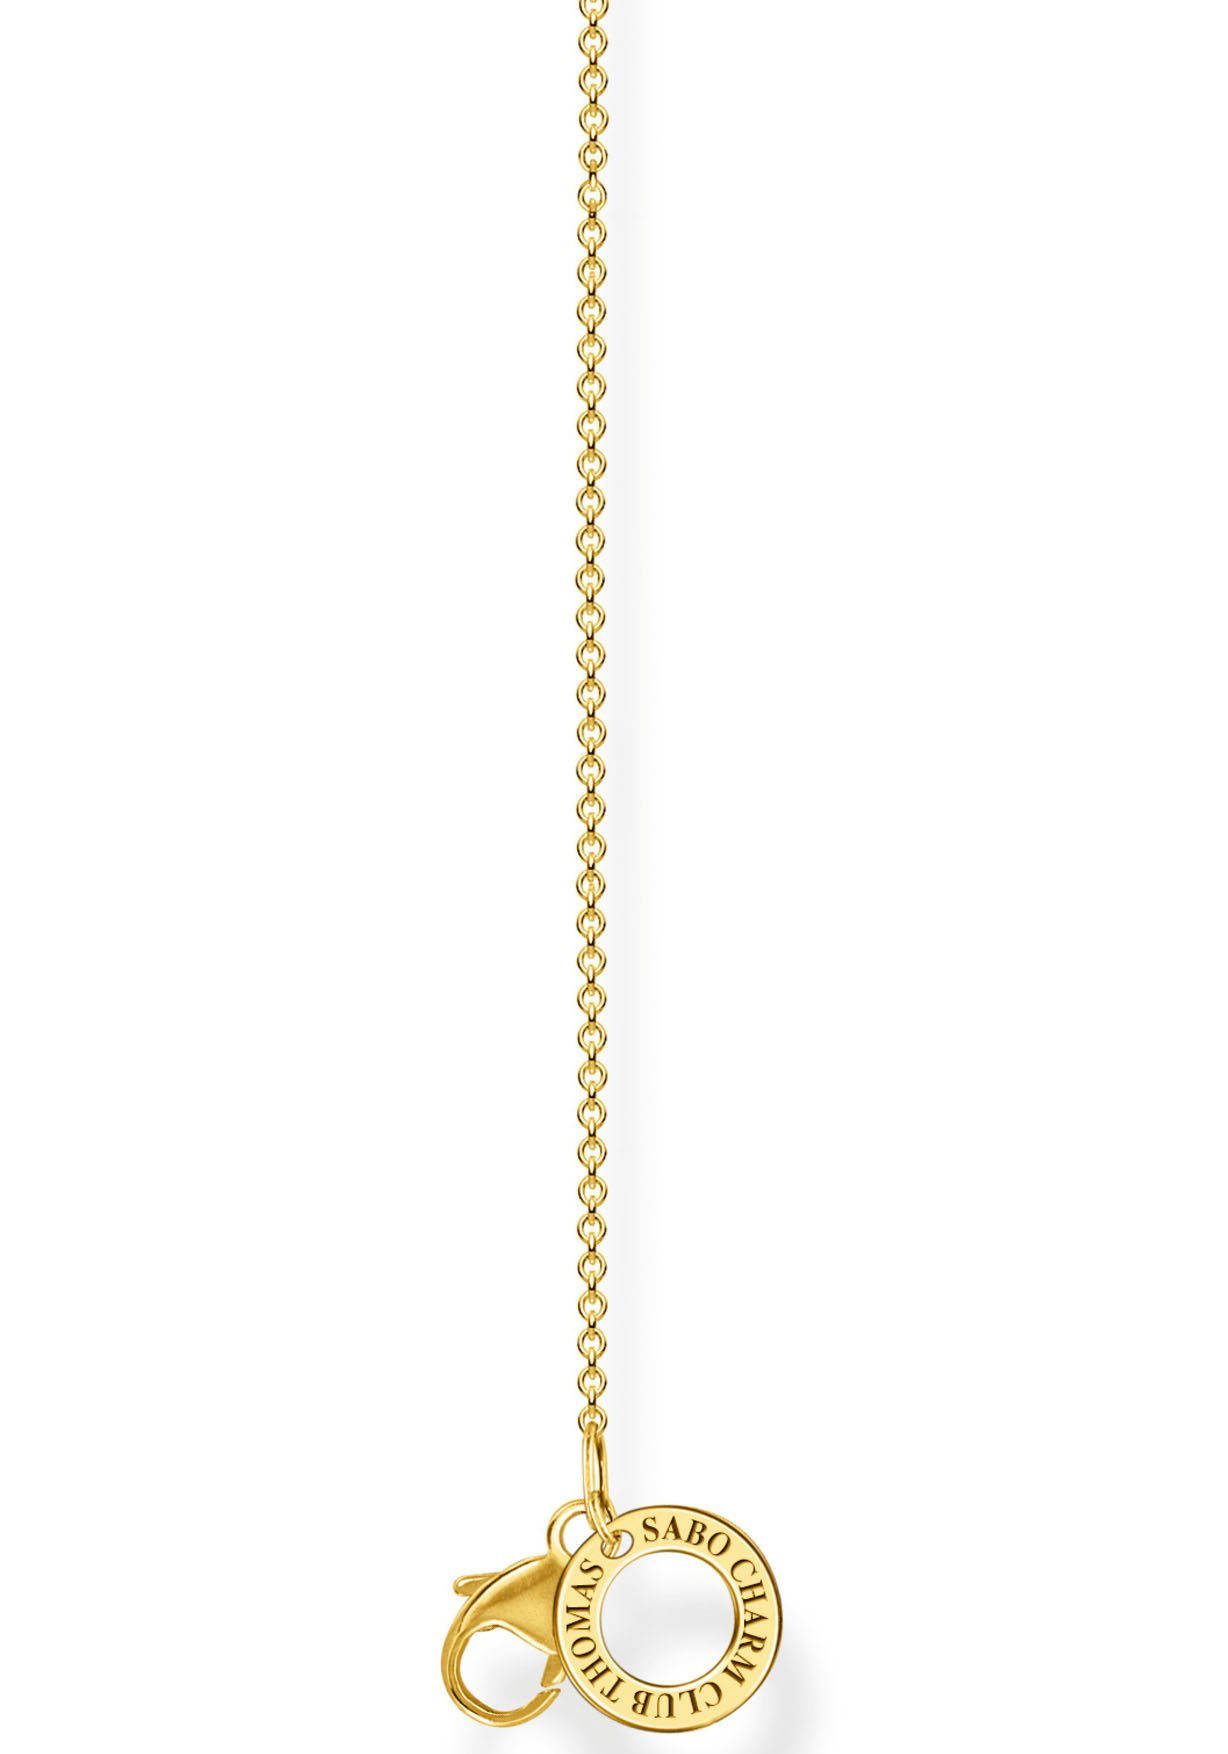 THOMAS SABO gelbgoldfarben Charm-Kette X0278-001-21-L45V, Charm-Kette, X0278-413-39-L45V